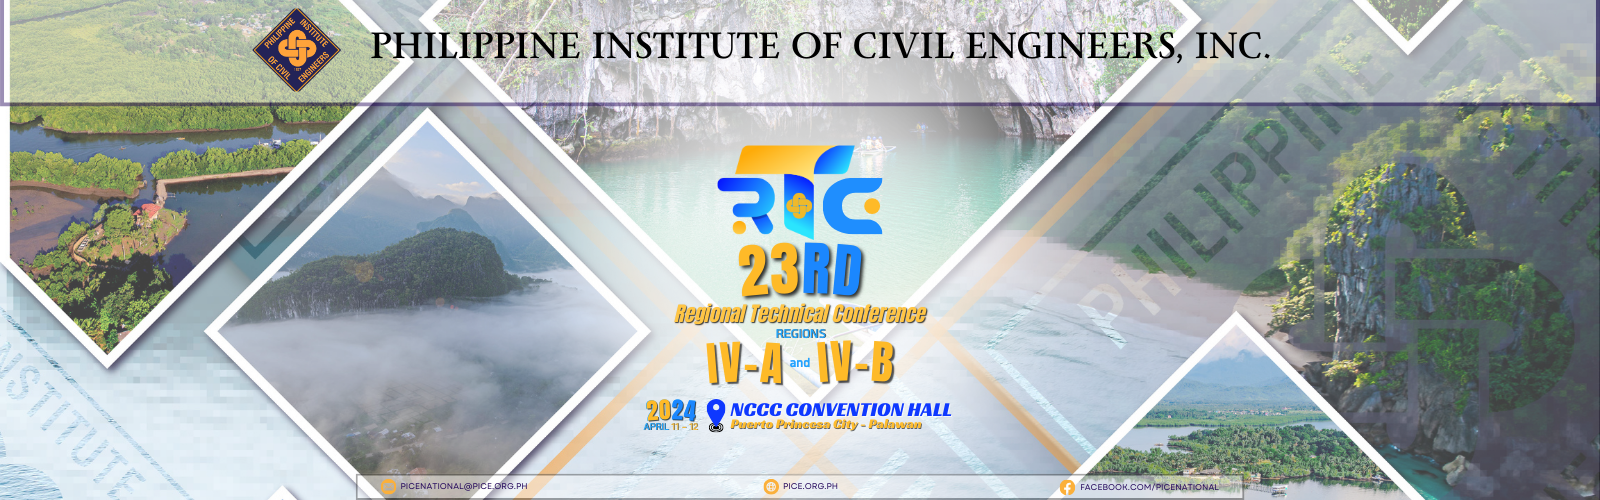 23rd Region IV-A & IV-B website banner